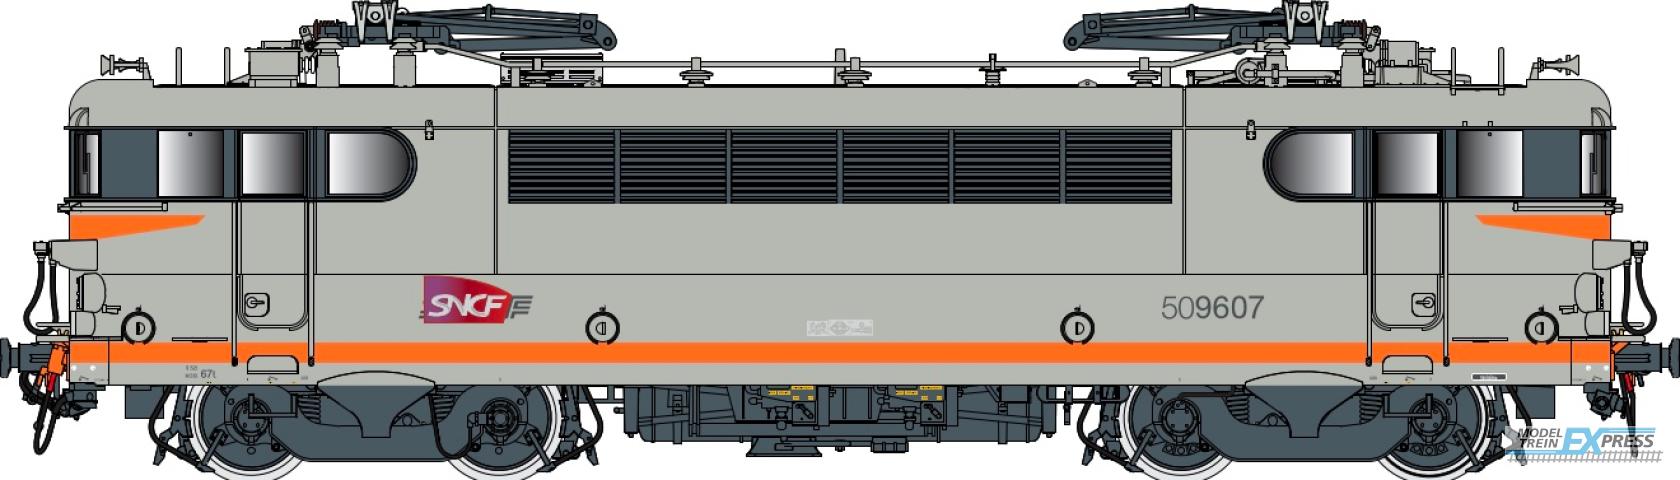 LS Models 10722S BB 9600, grijs/oranje, carmillon logo  /  Ep. V  /  SNCF  /  HO  /  AC SOUND  /  1 P.